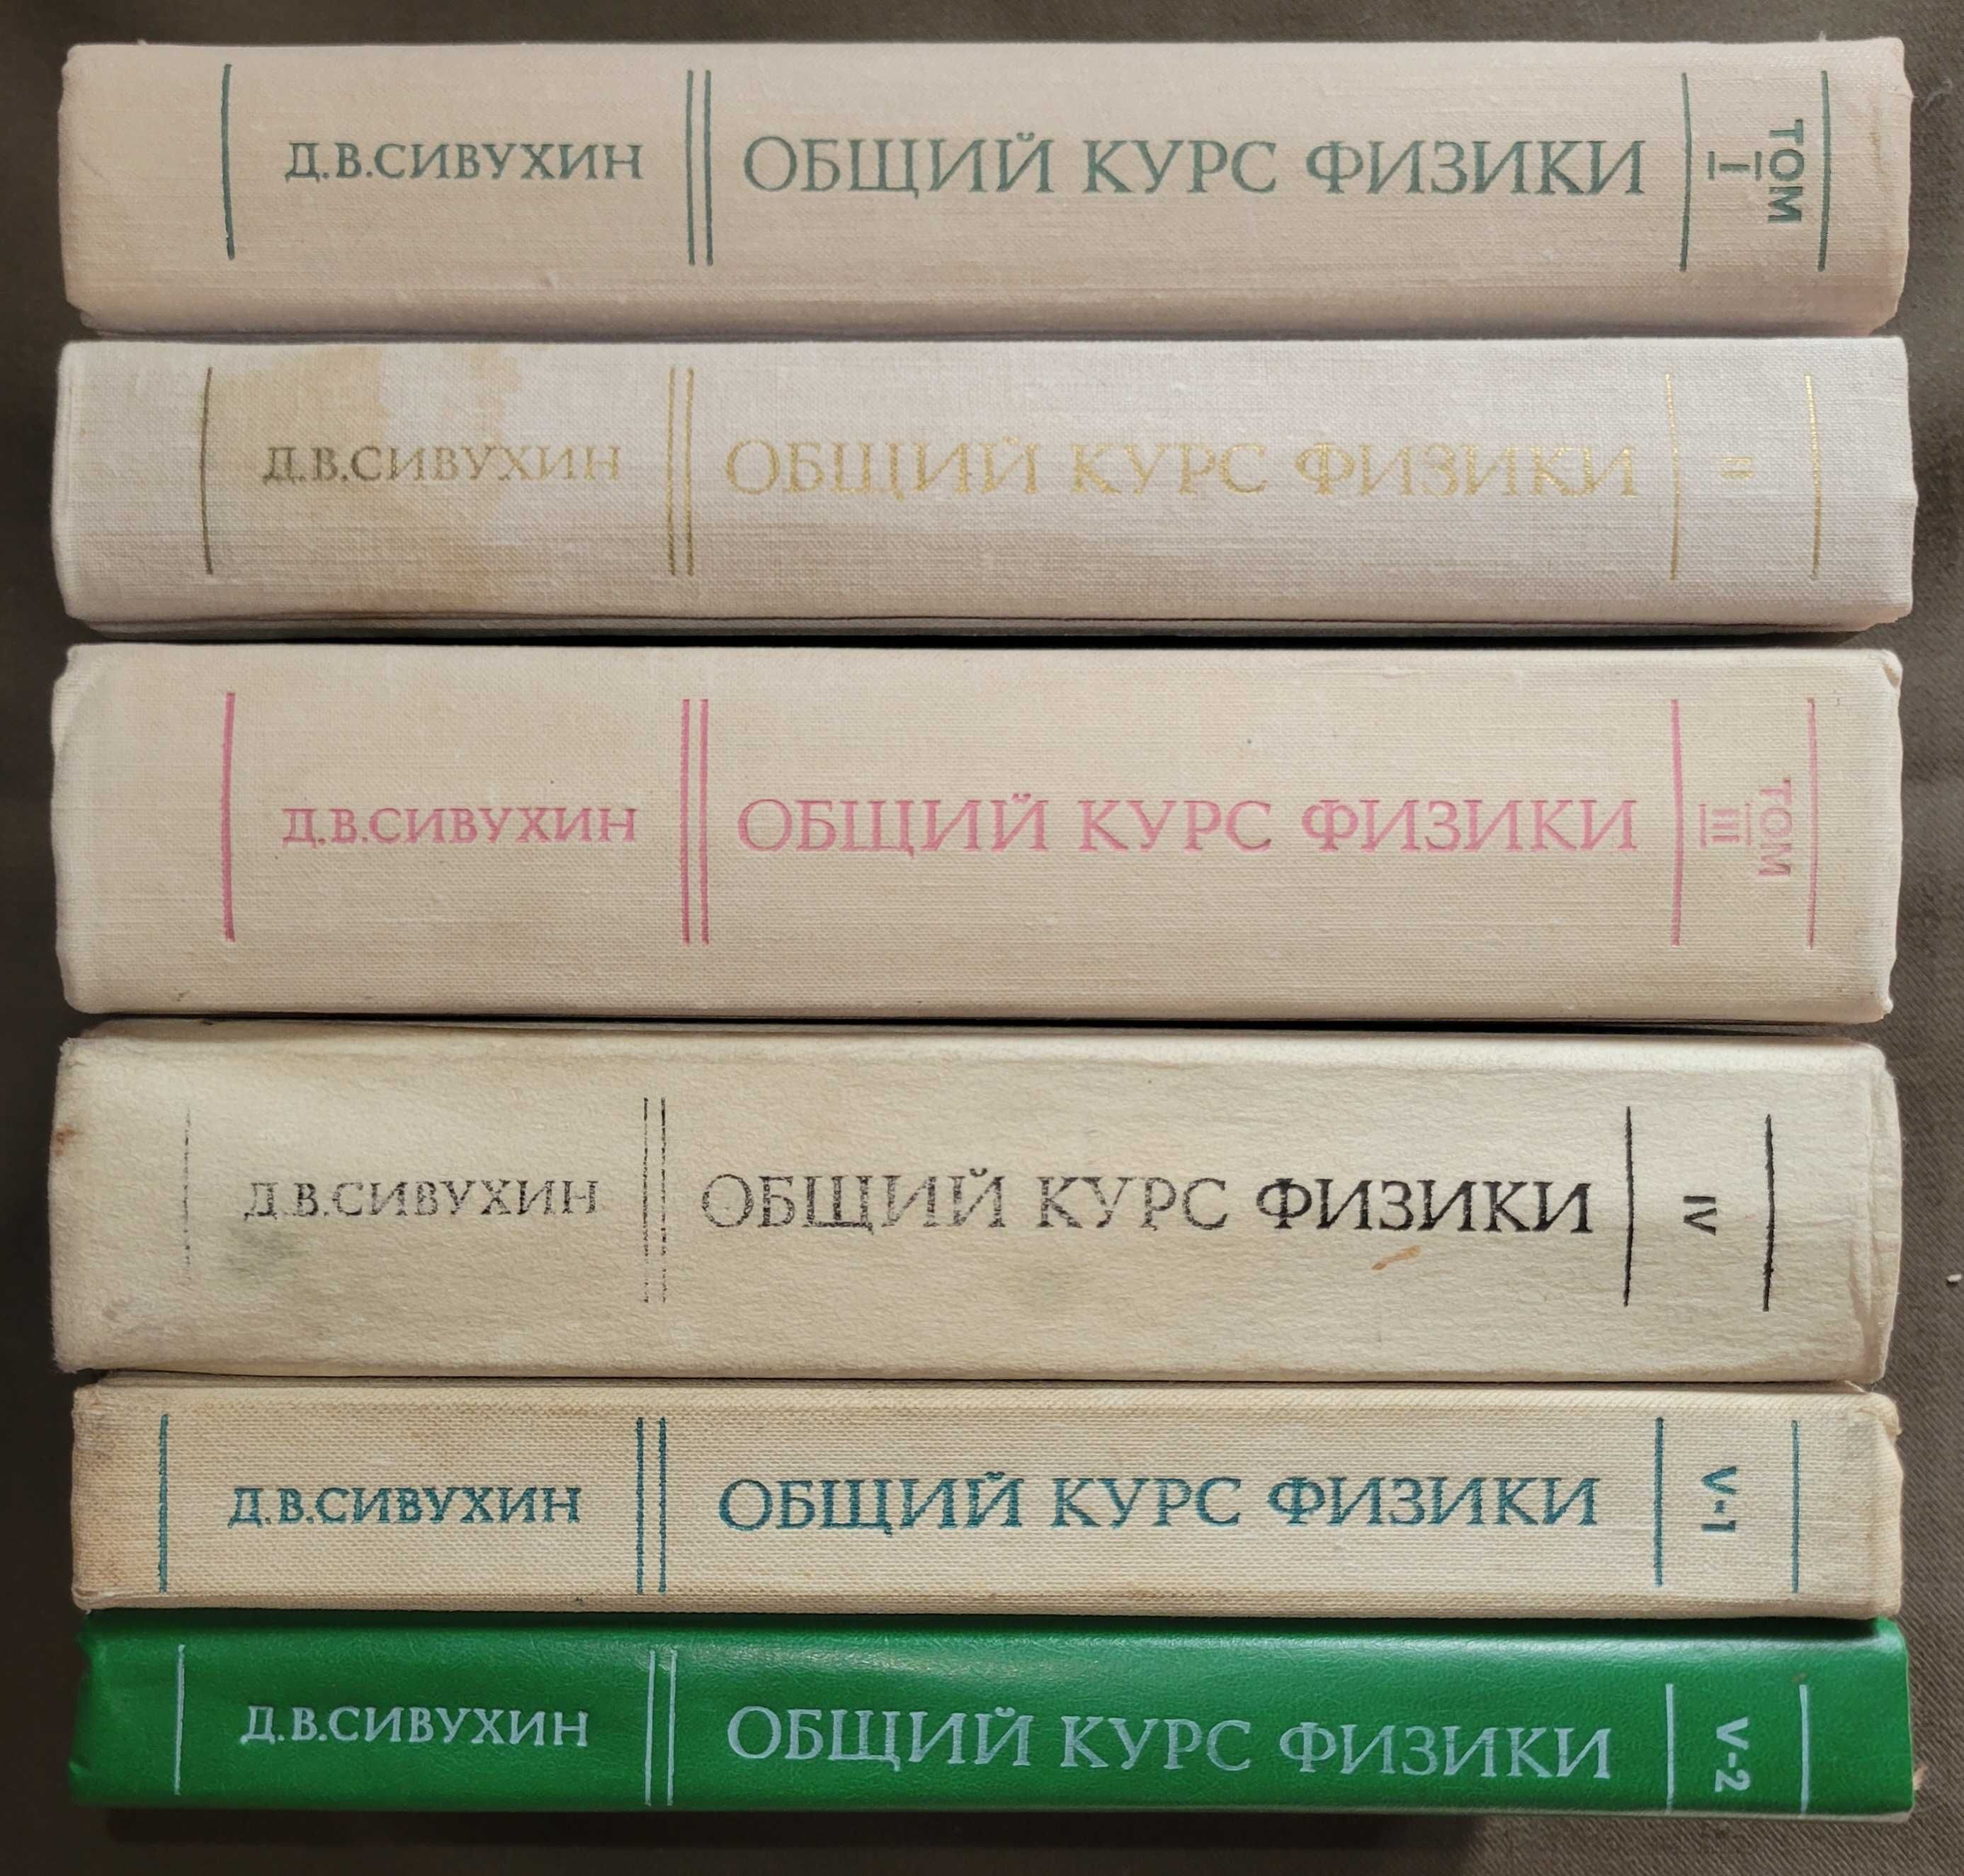 Сивухин Д.В. - Общий курс физики в 5 томах